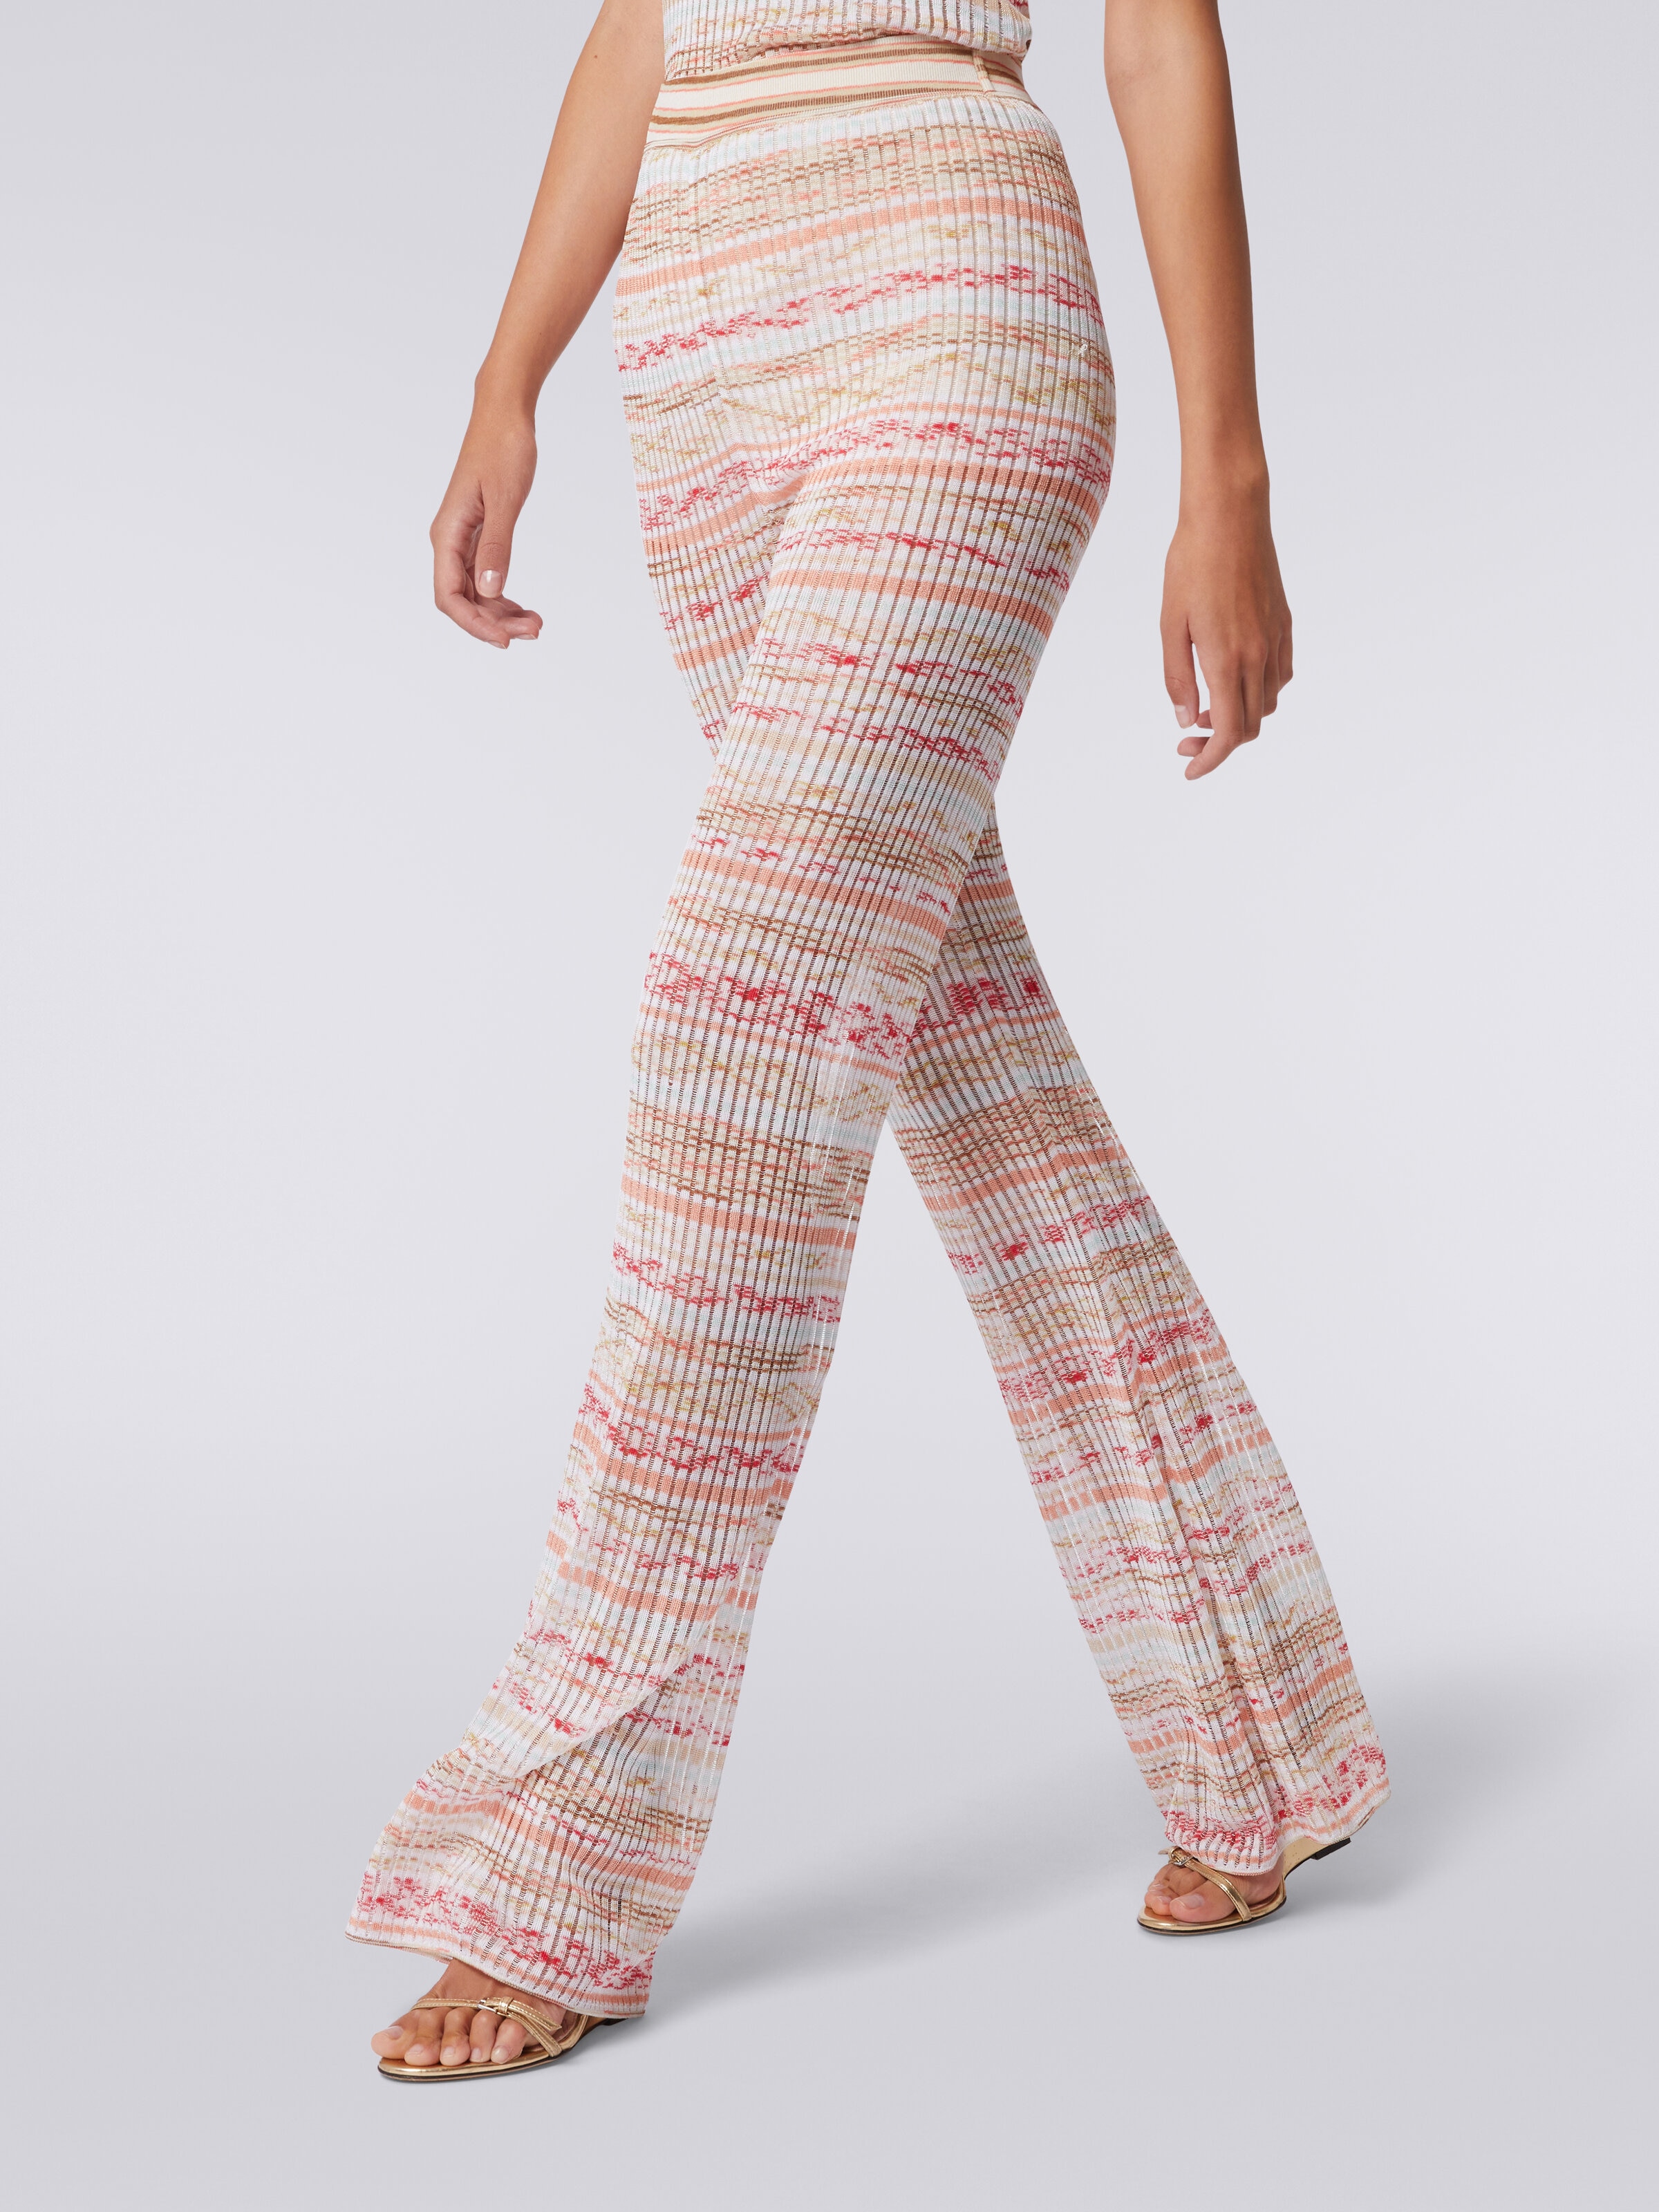 Ribbed trousers in slub viscose knit, Multicoloured  - 4